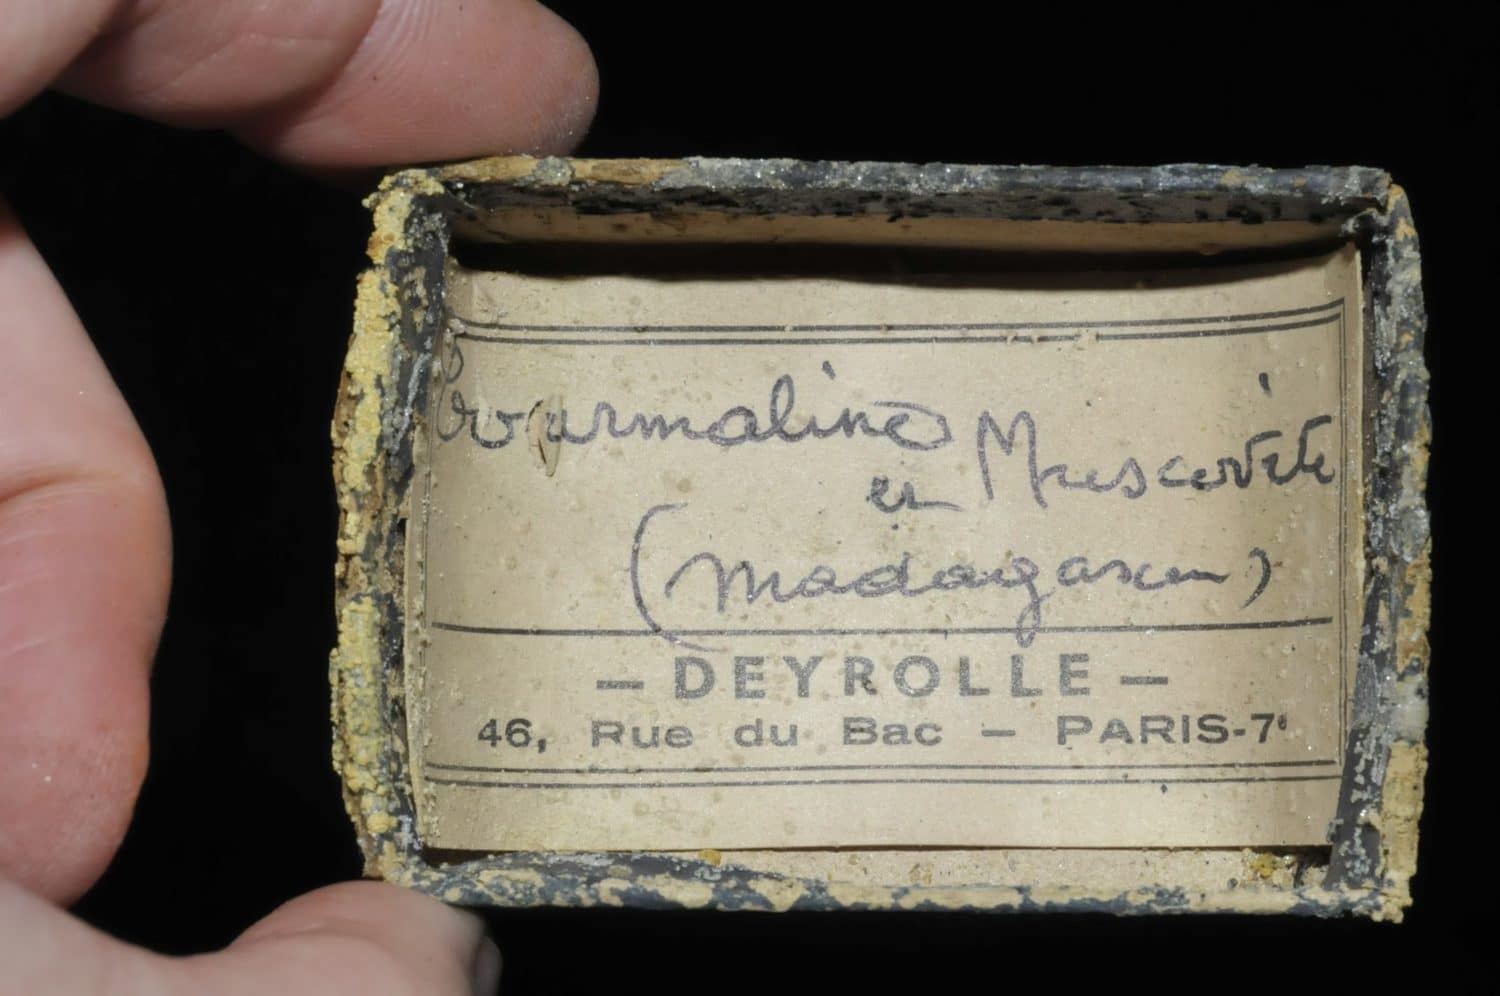 Tourmaline et muscovite de Madagascar (ex Deyrolle).